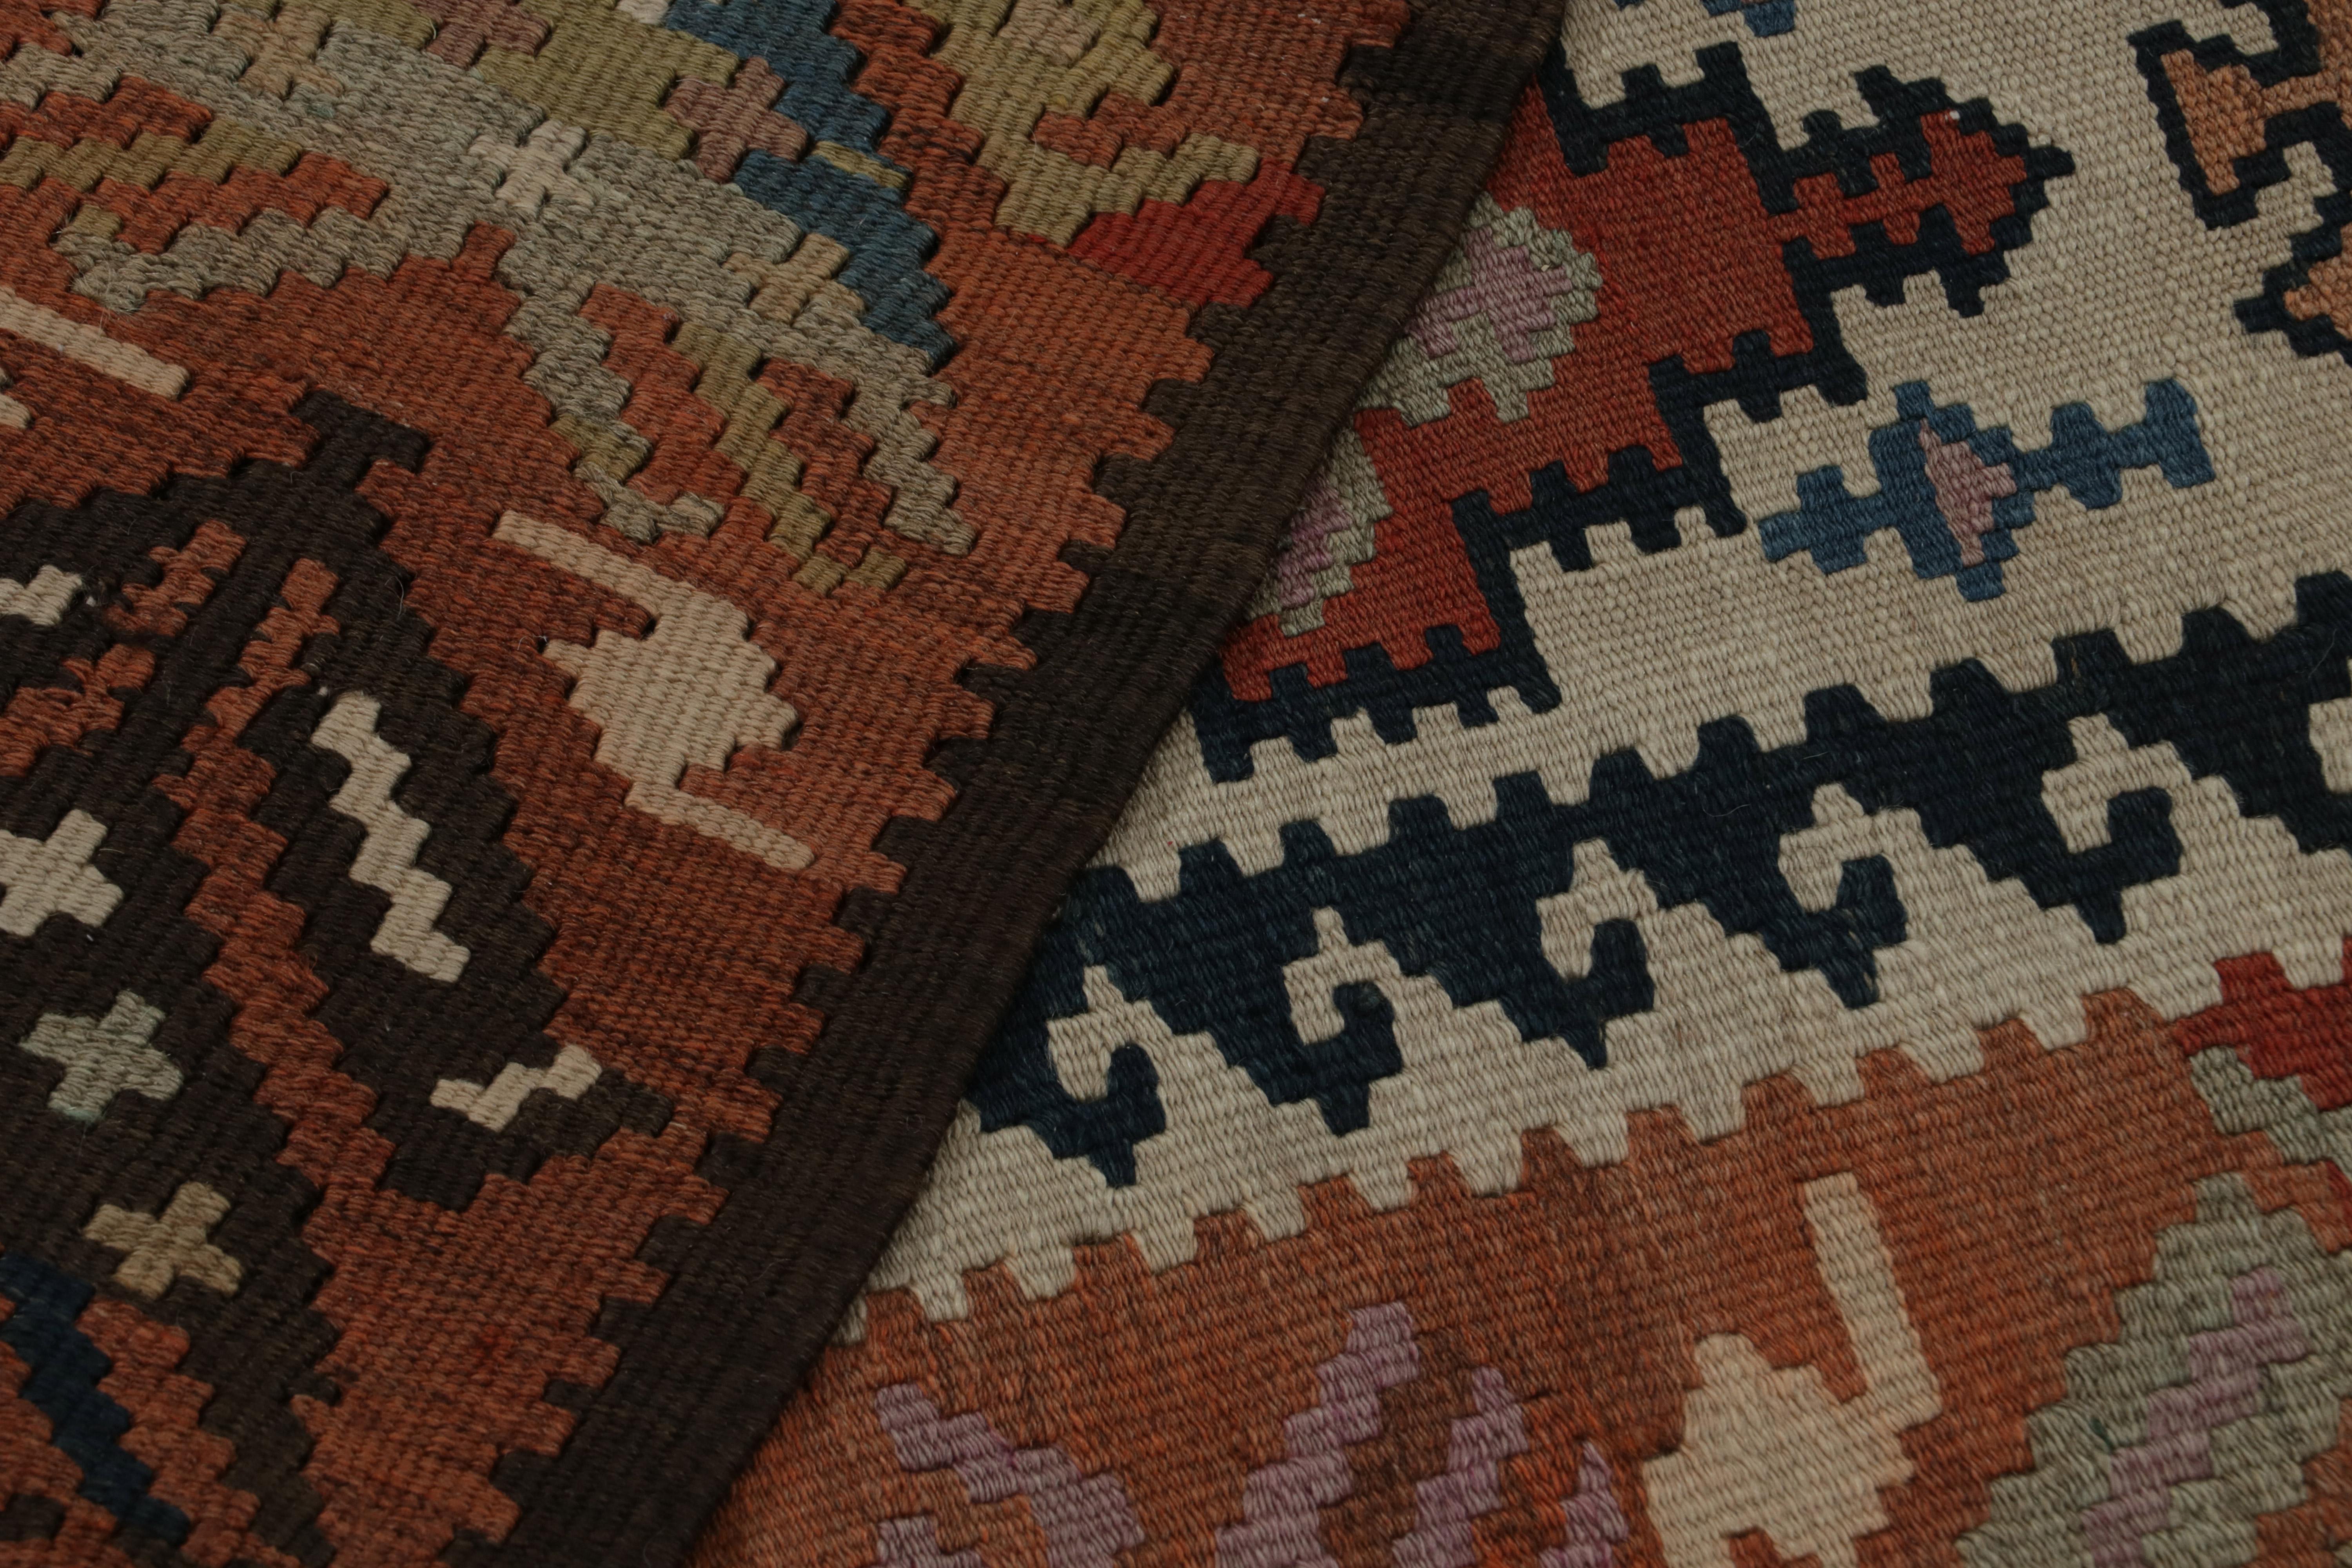 Wool Vintage Tribal Kilim in Blue-Brown Geometric Patterns, from Rug & Kilim For Sale